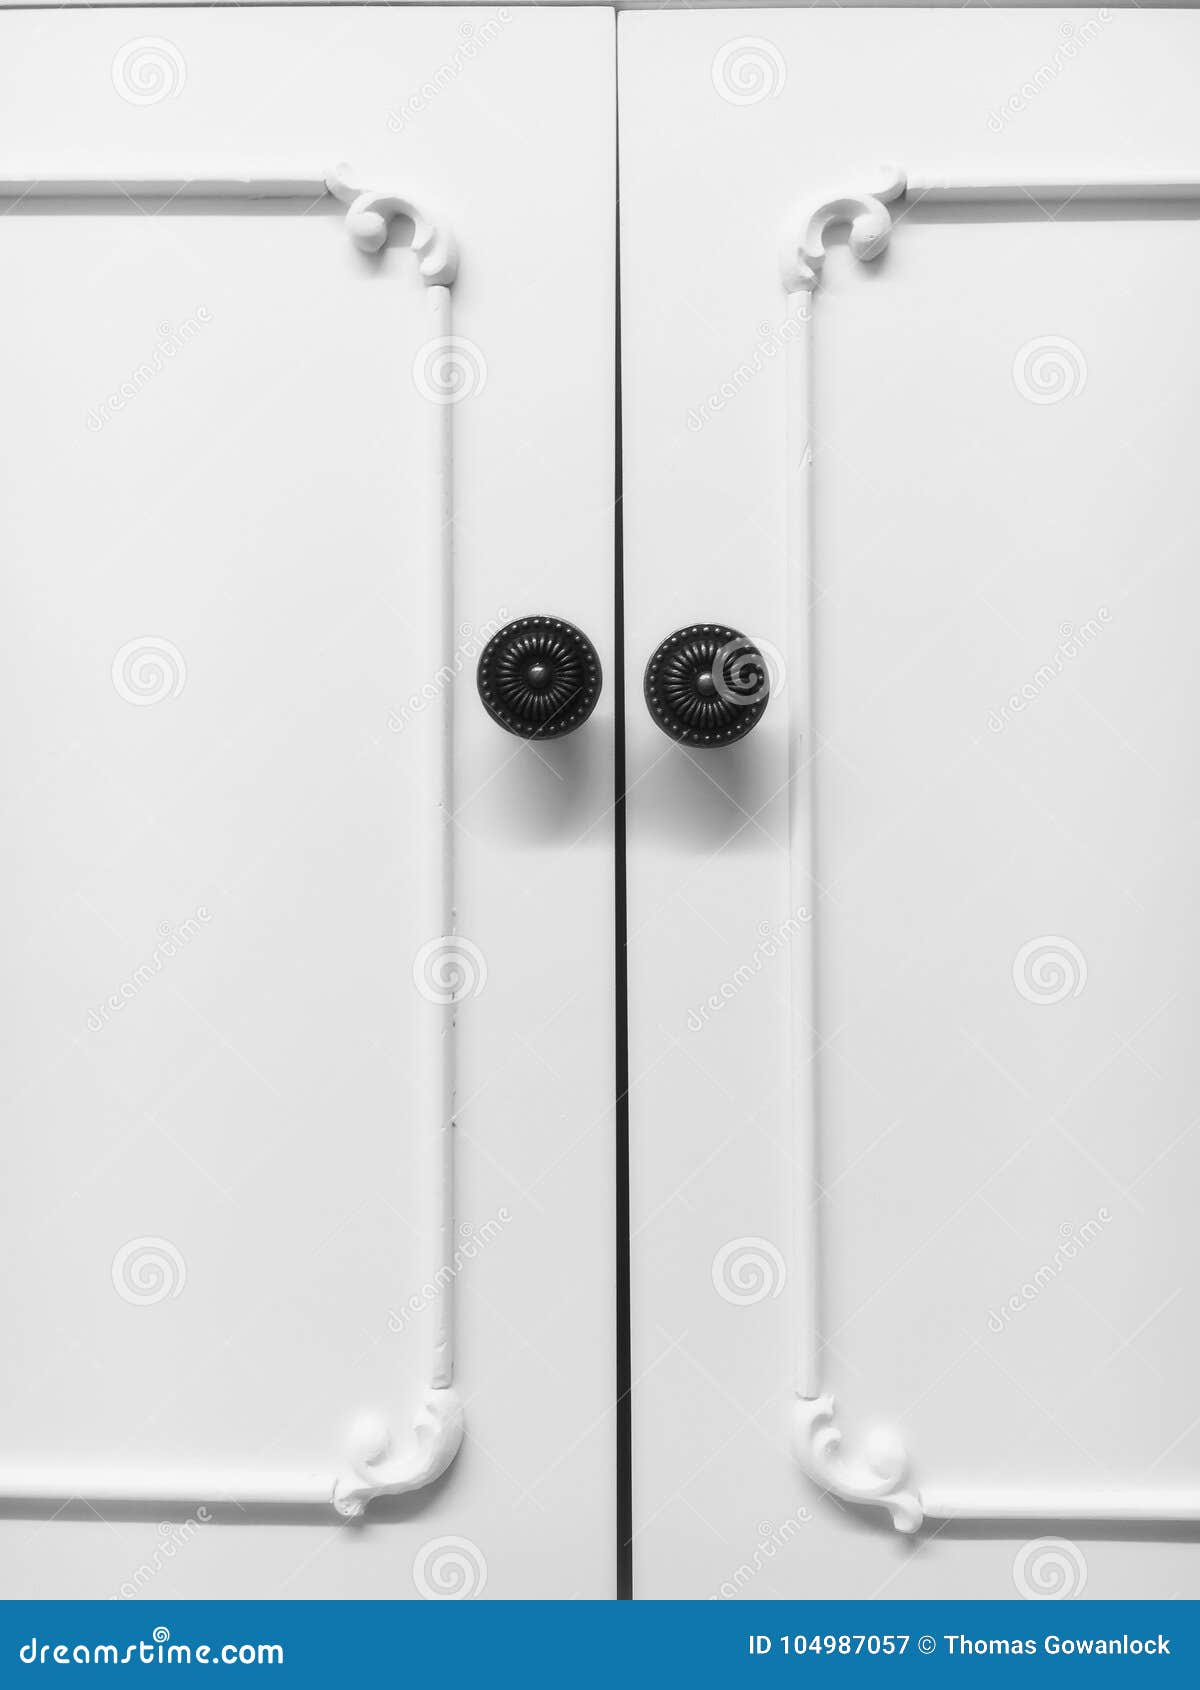 White cabinet doors stock image. Image of furniture - 104987057